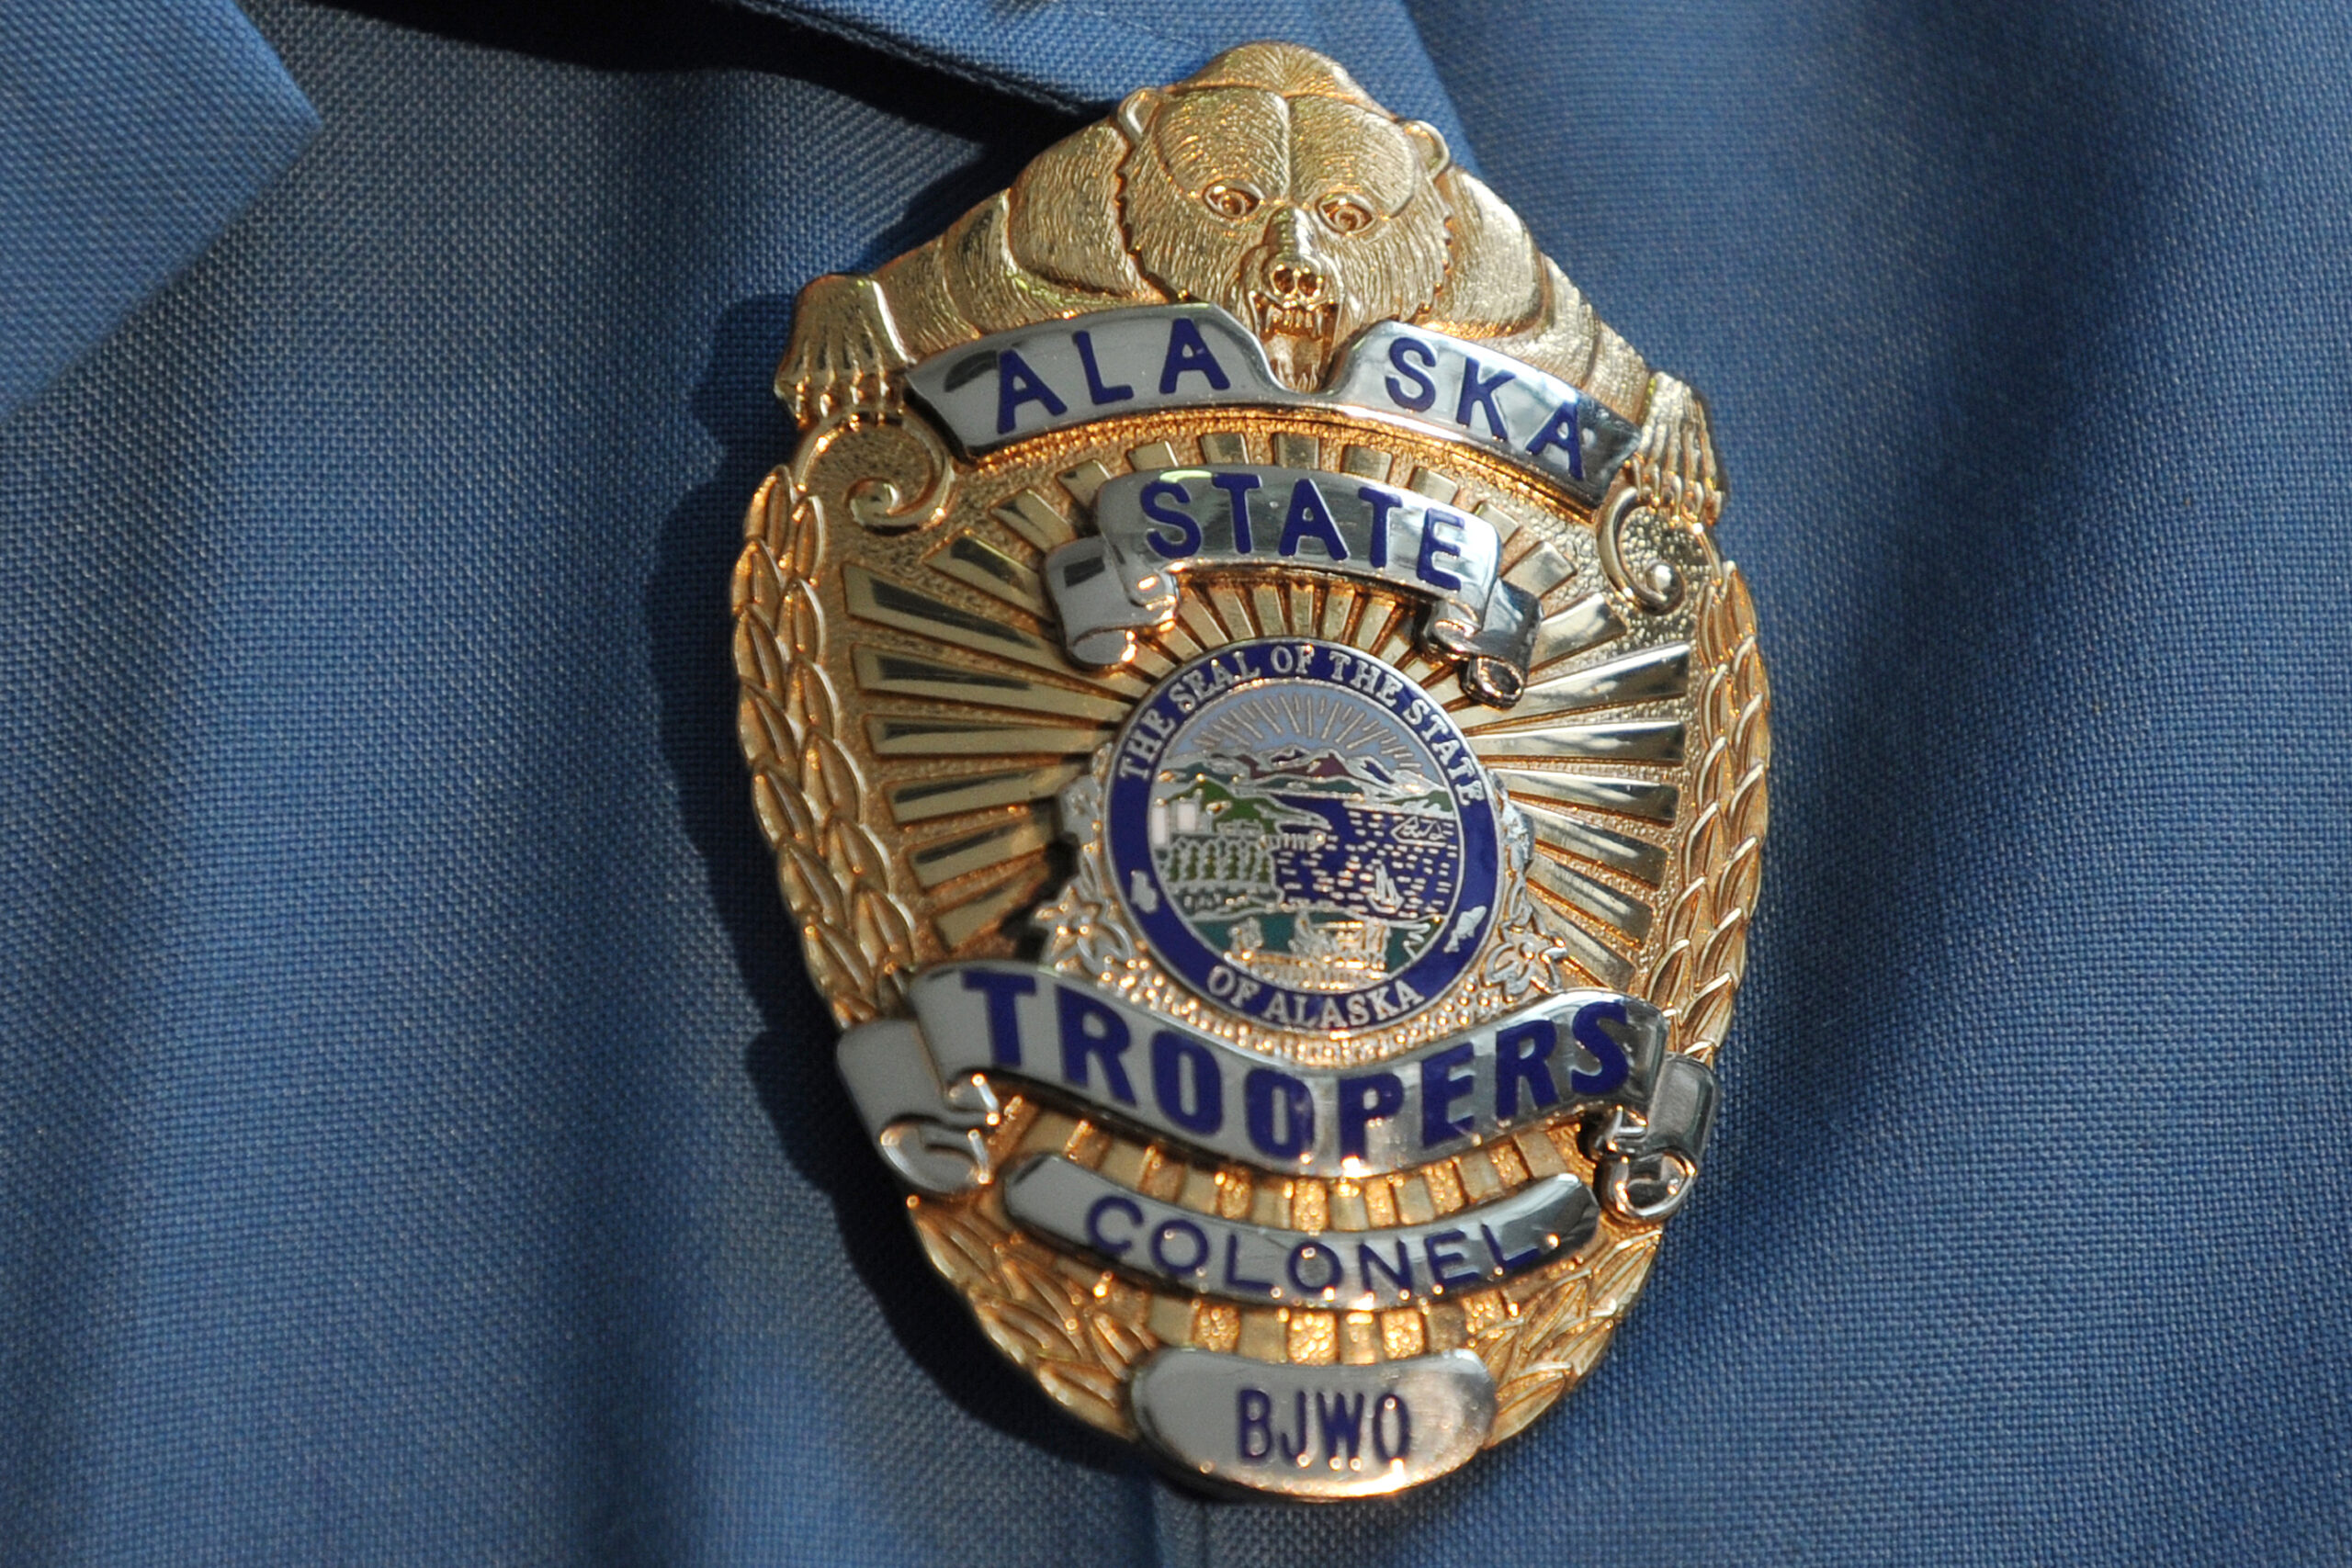 Public Safety Academy Graduates 43 New Law Enforcement Officers